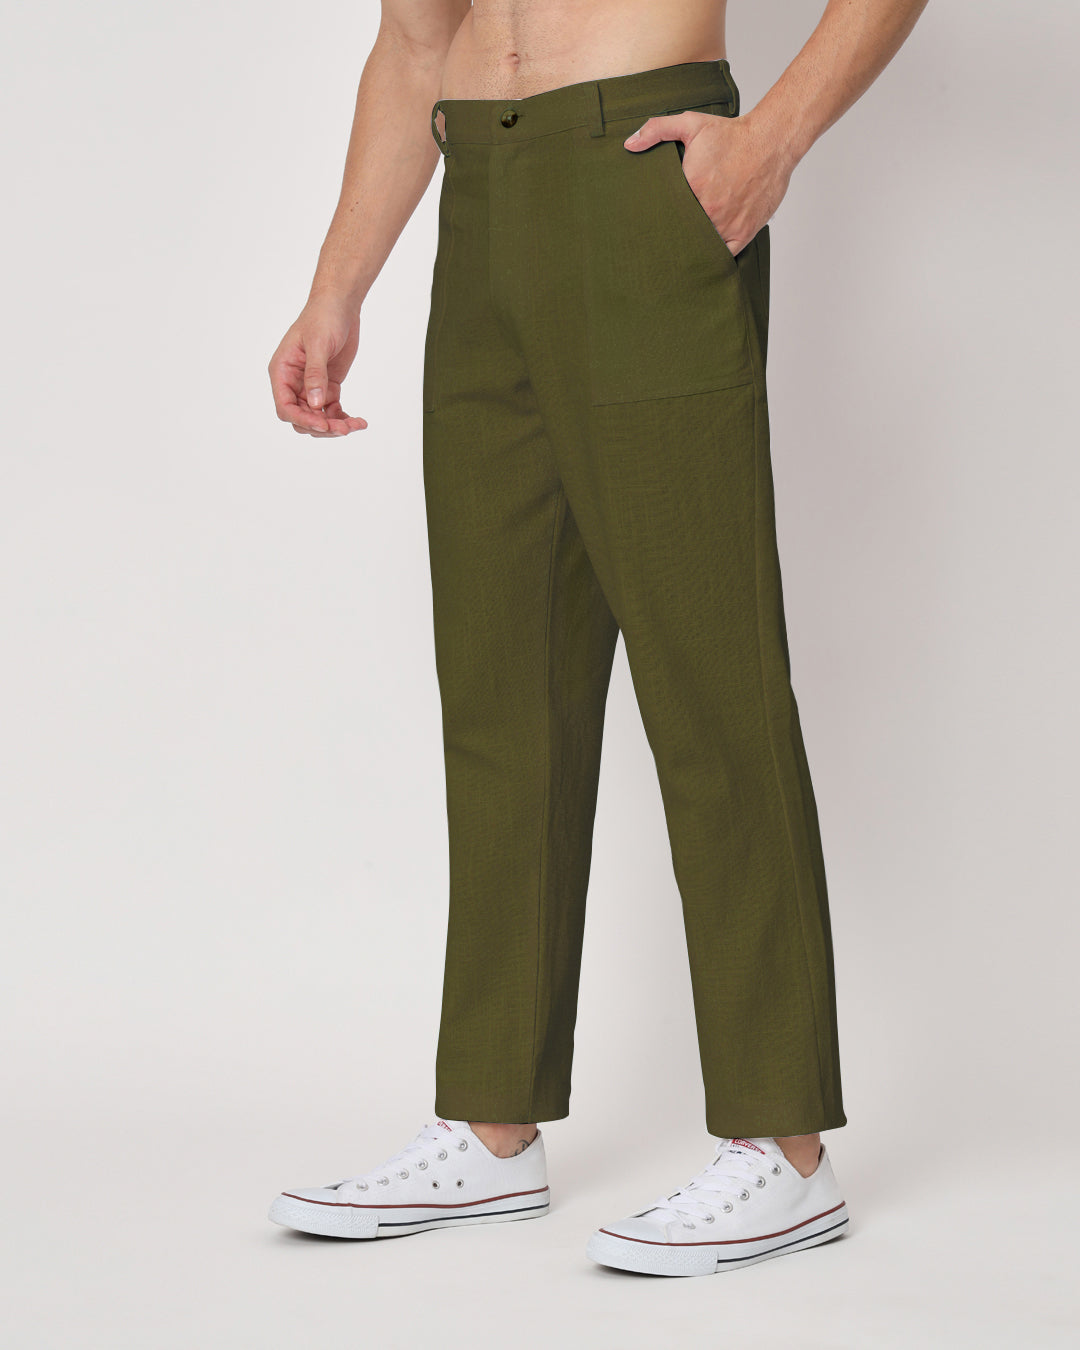 Combo : Comfy Ease White & Olive Green Men's Pants - Set of 2